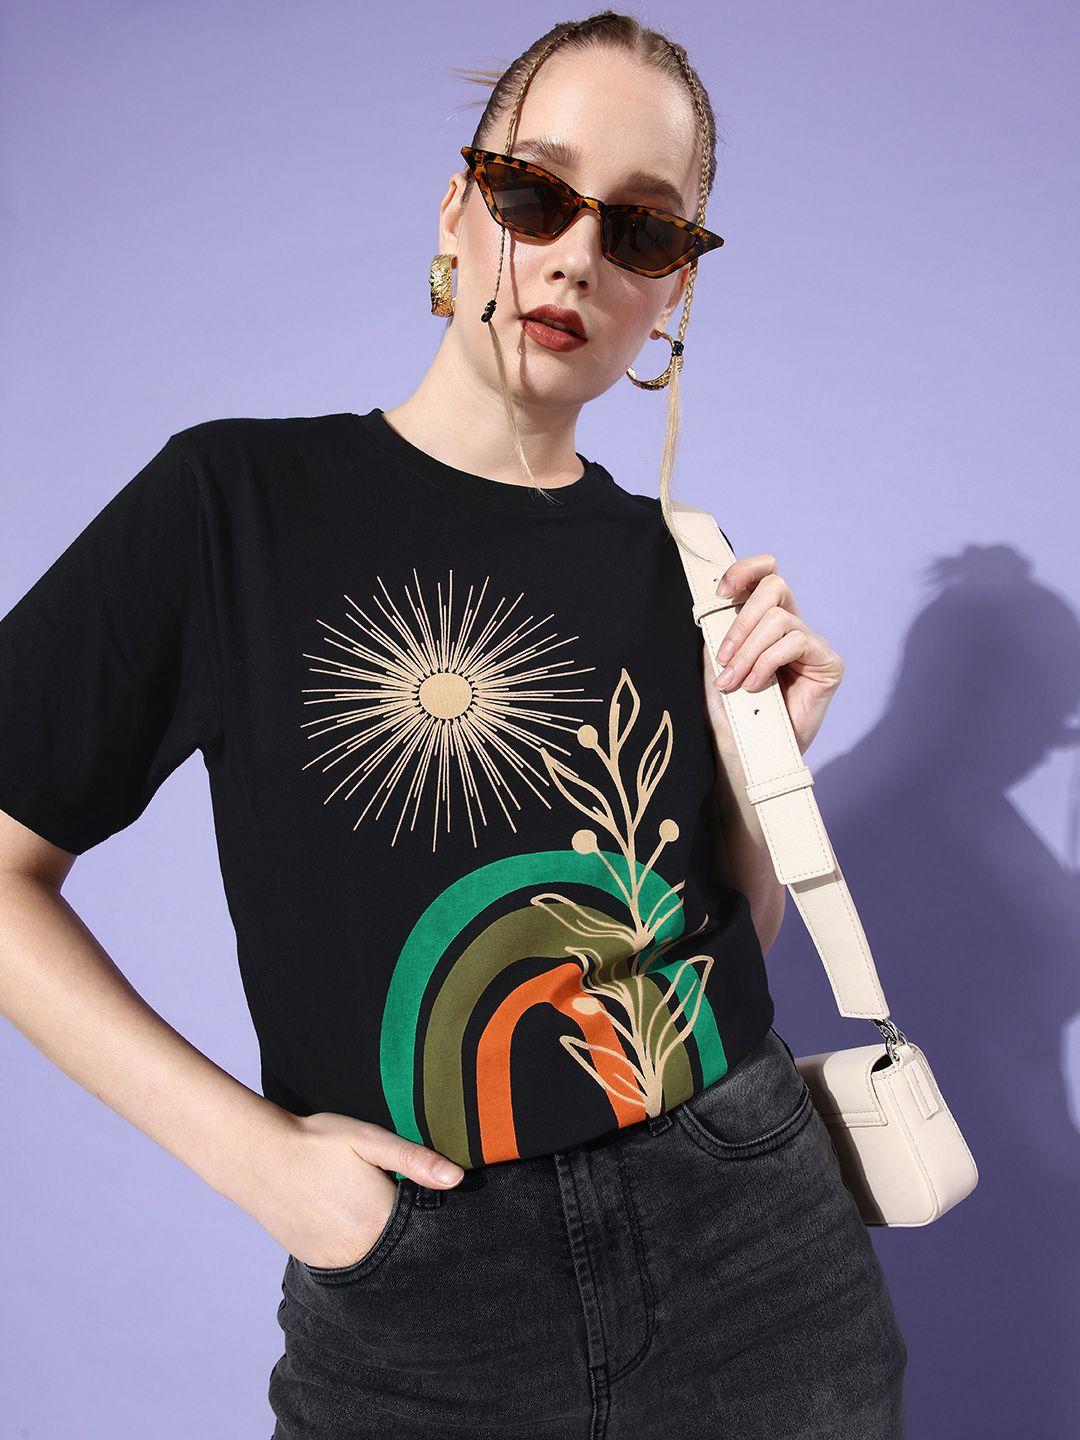 dillinger-women-graphic-printed-loose-t-shirt